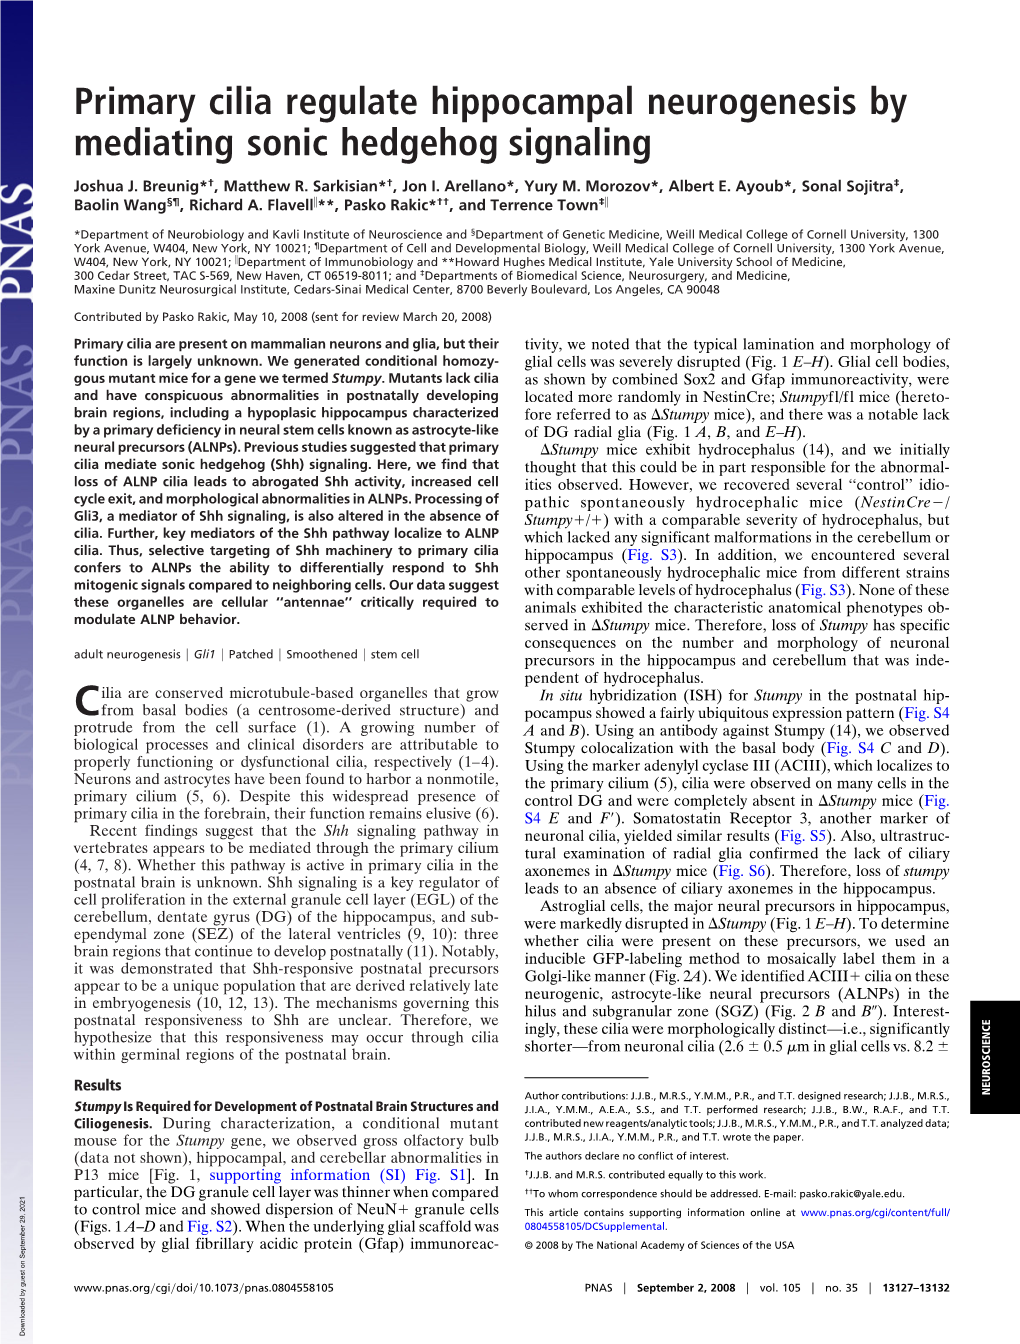 Primary Cilia Regulate Hippocampal Neurogenesis by Mediating Sonic Hedgehog Signaling